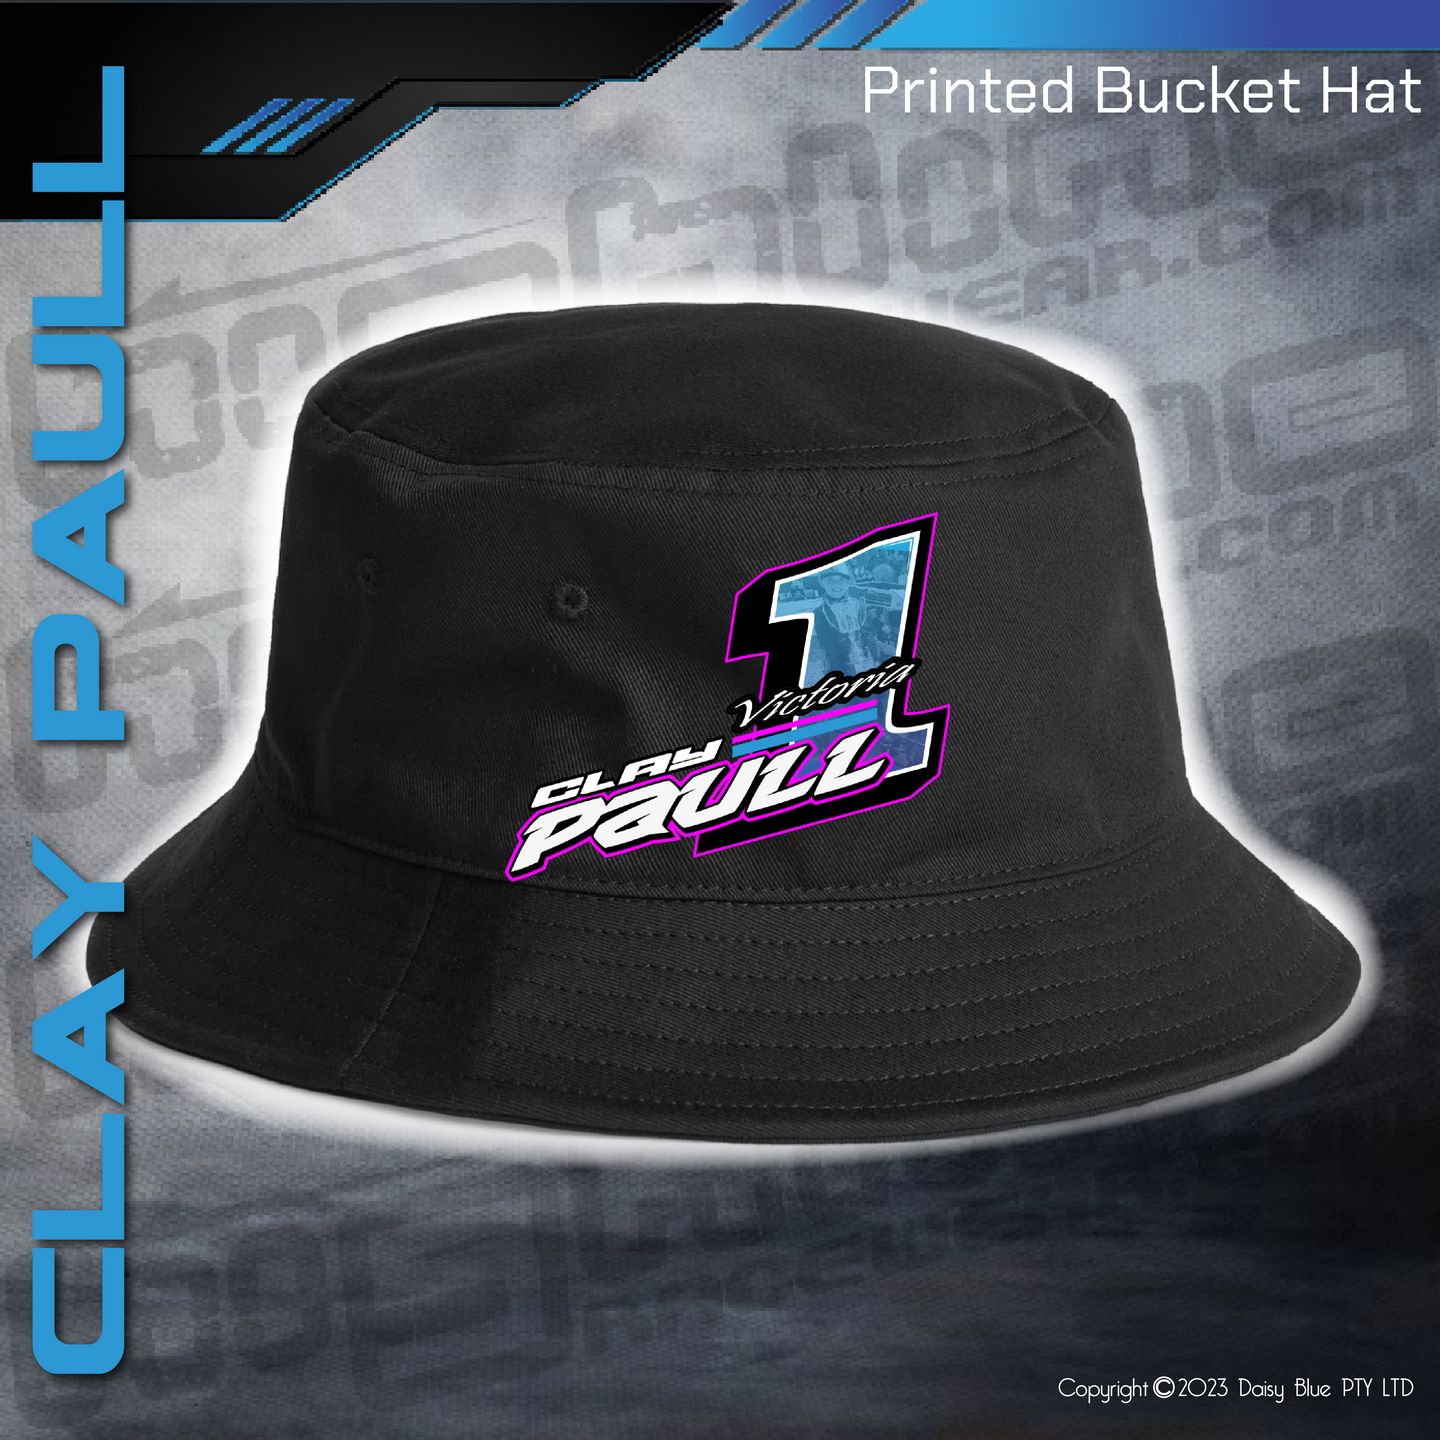 Printed Bucket Hat - Clay Paull